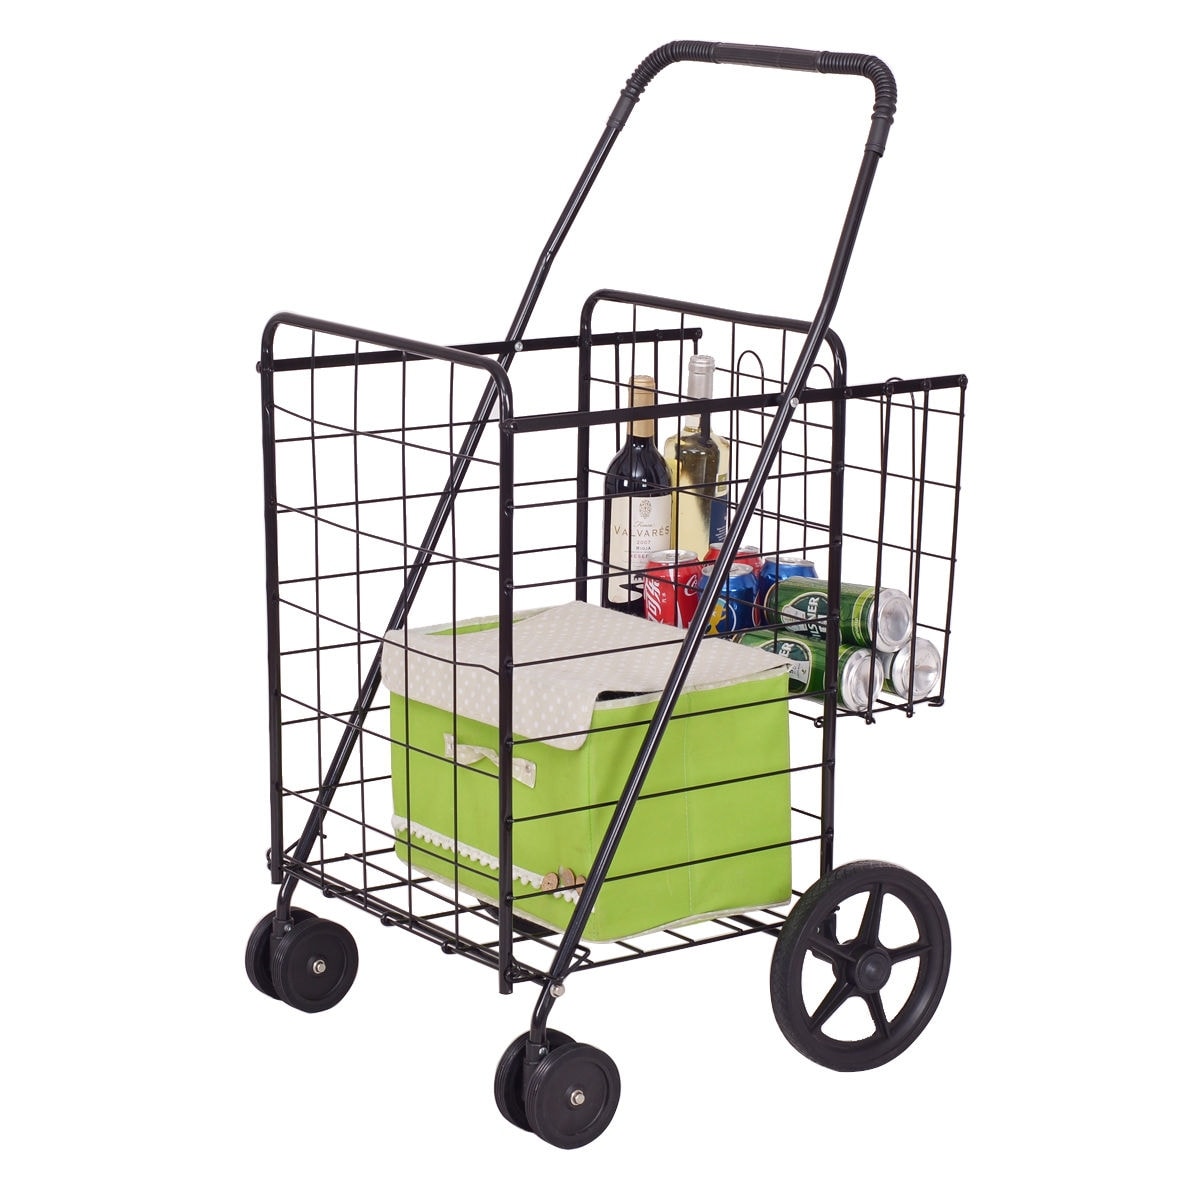 MOUNT-IT! Steel 4-Wheel Rolling Utility Shopping Cart With Basket In ...